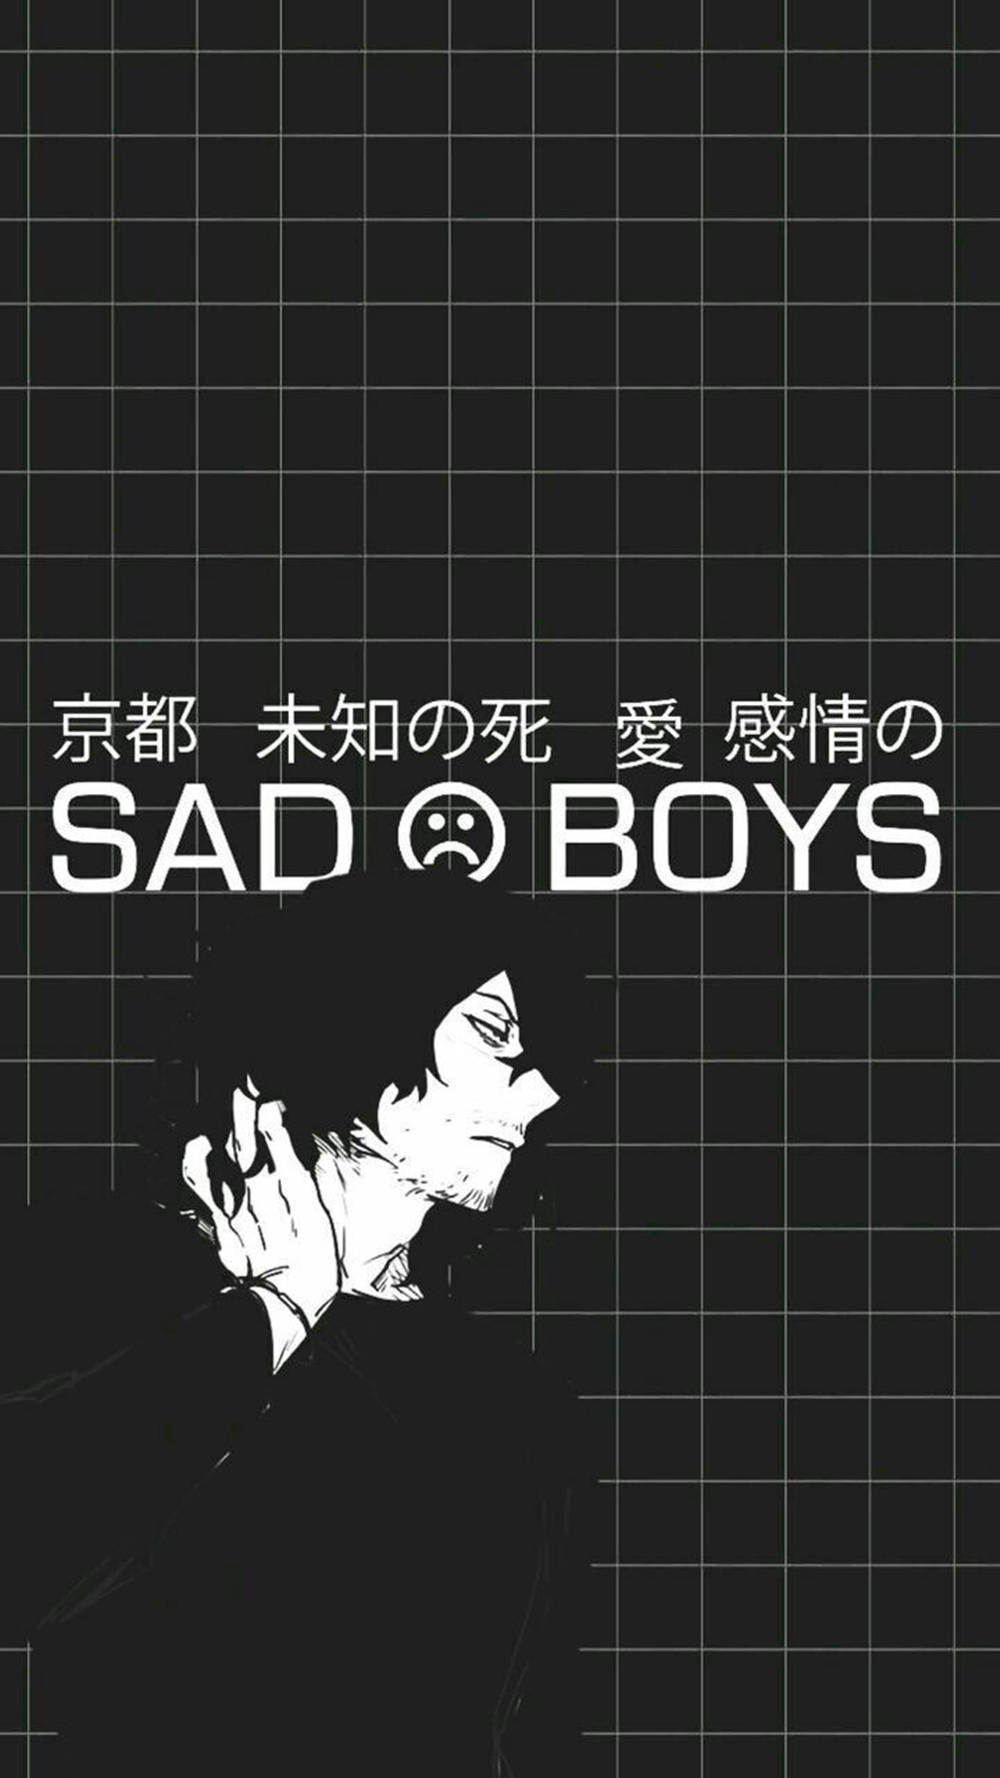 Boys With Sad Aesthetic Tumblr Dark Wallpaper